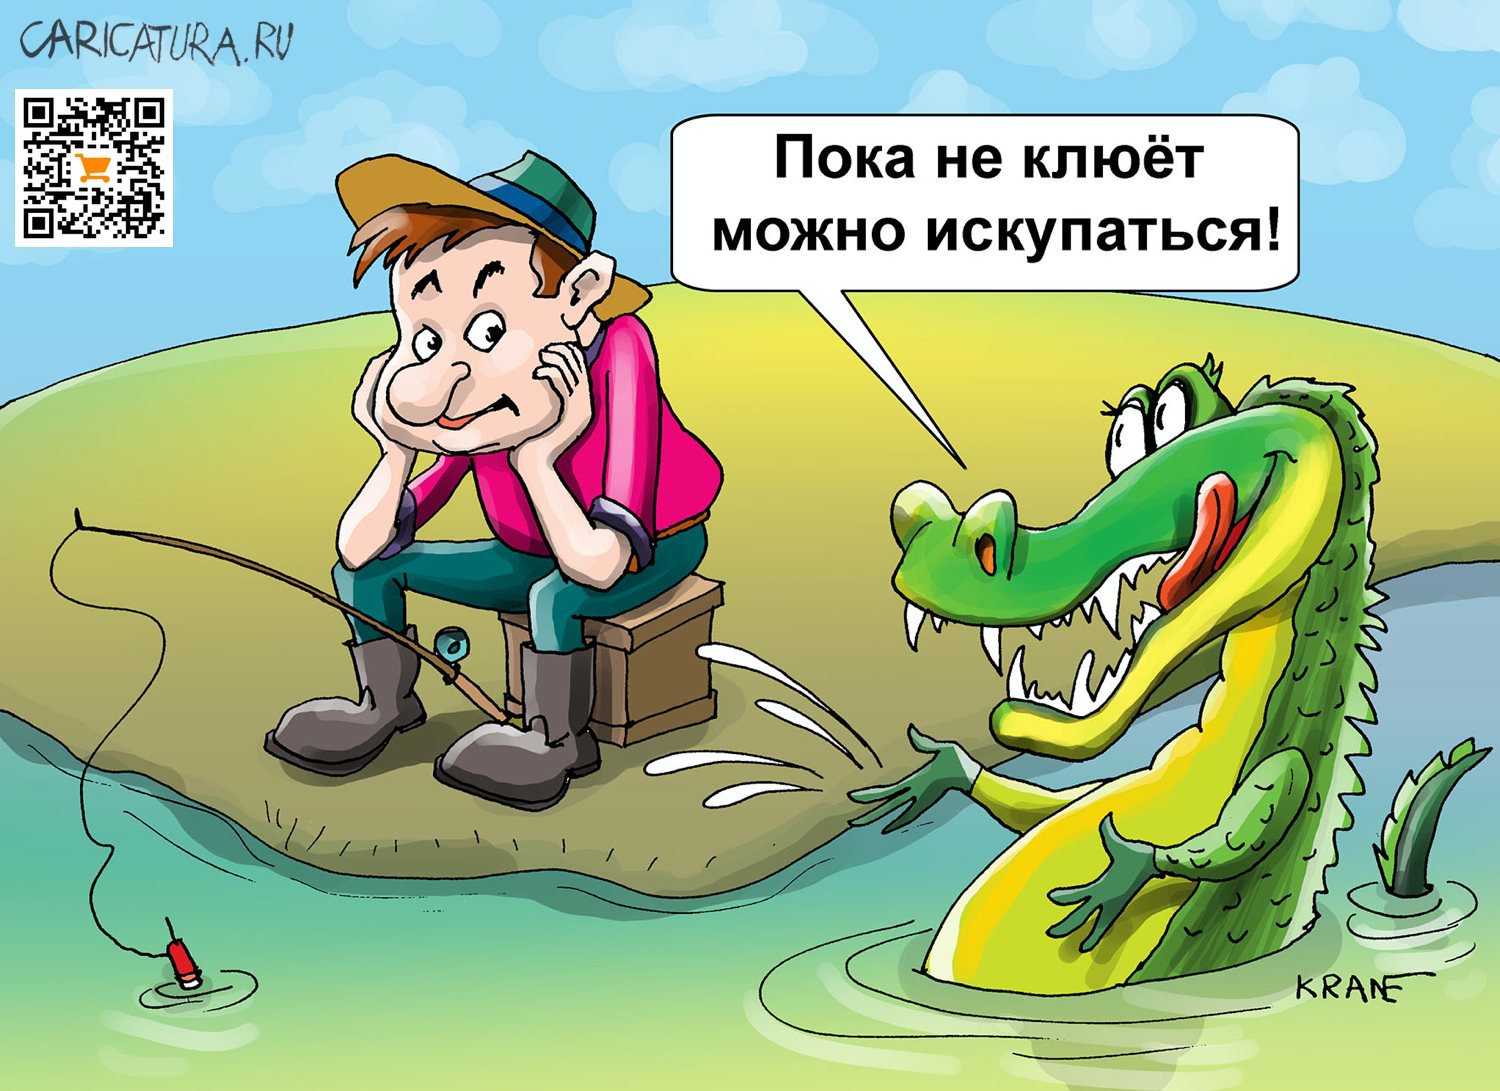 Карикатура "Хитрый крокодил", Евгений Кран